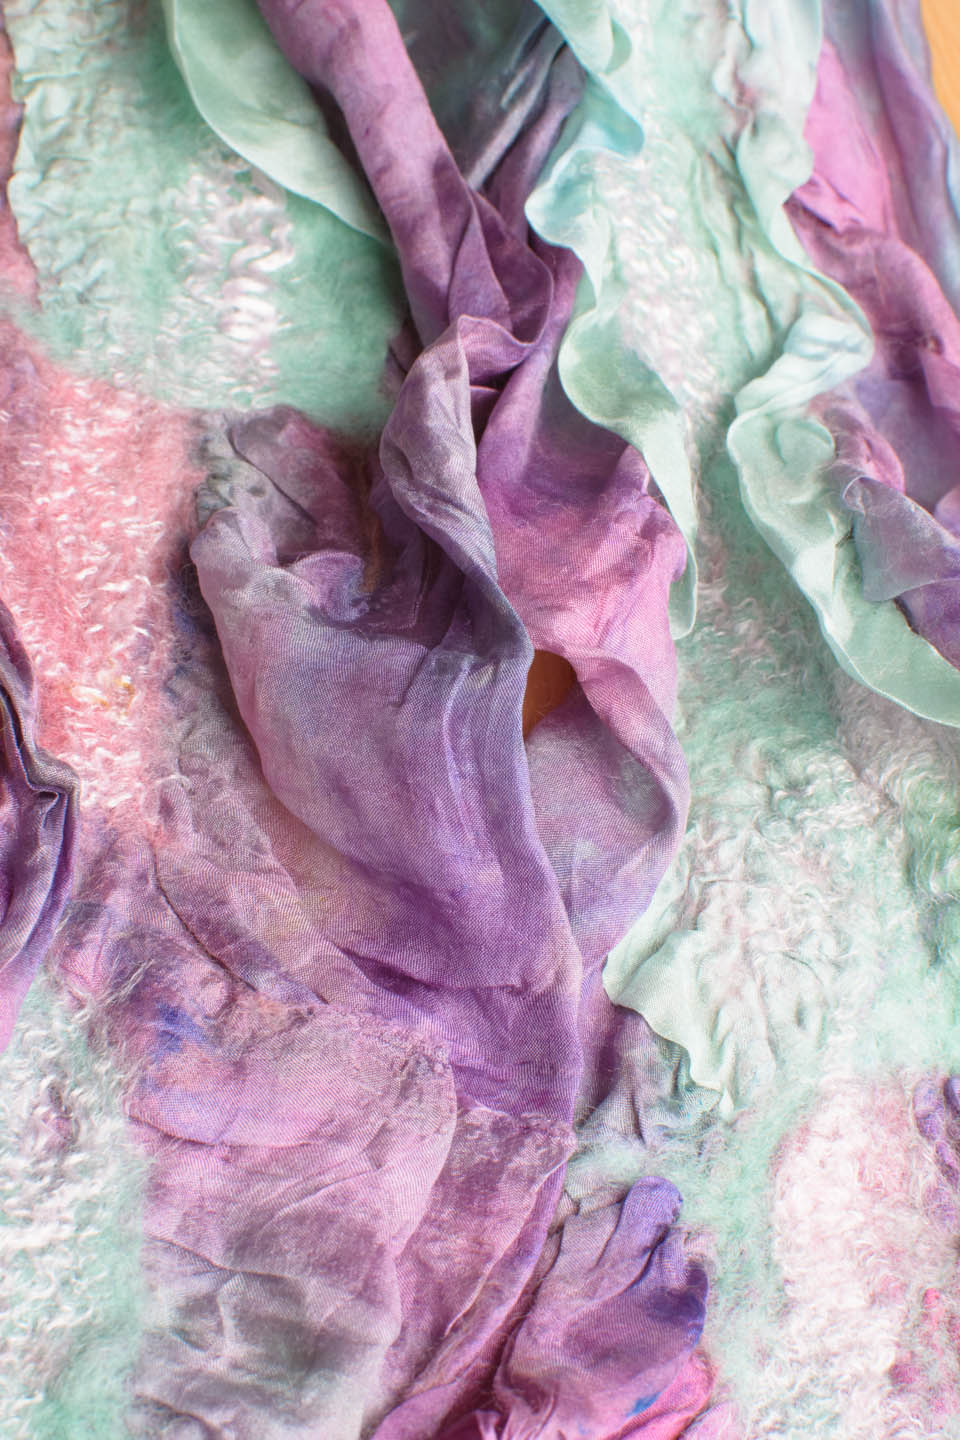 Handmade nuno felted colorwash scarfs by Melinda LaBarge